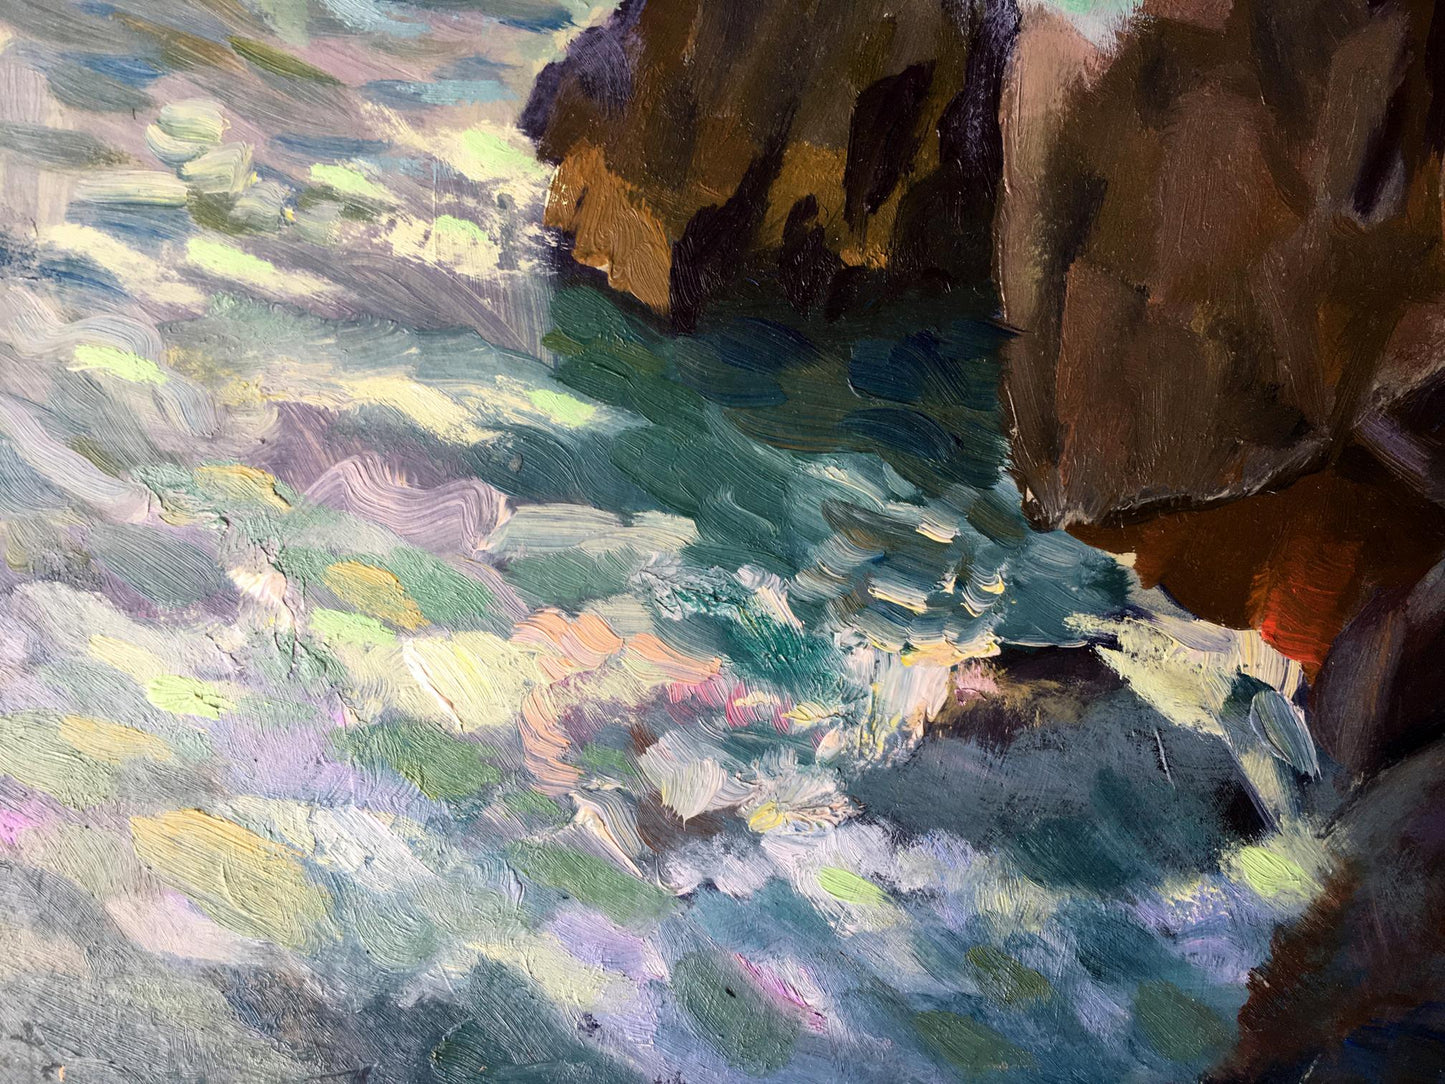 Oil painting "Morning by the Sea" by Batrakov, depicting serene seaside sunrise.